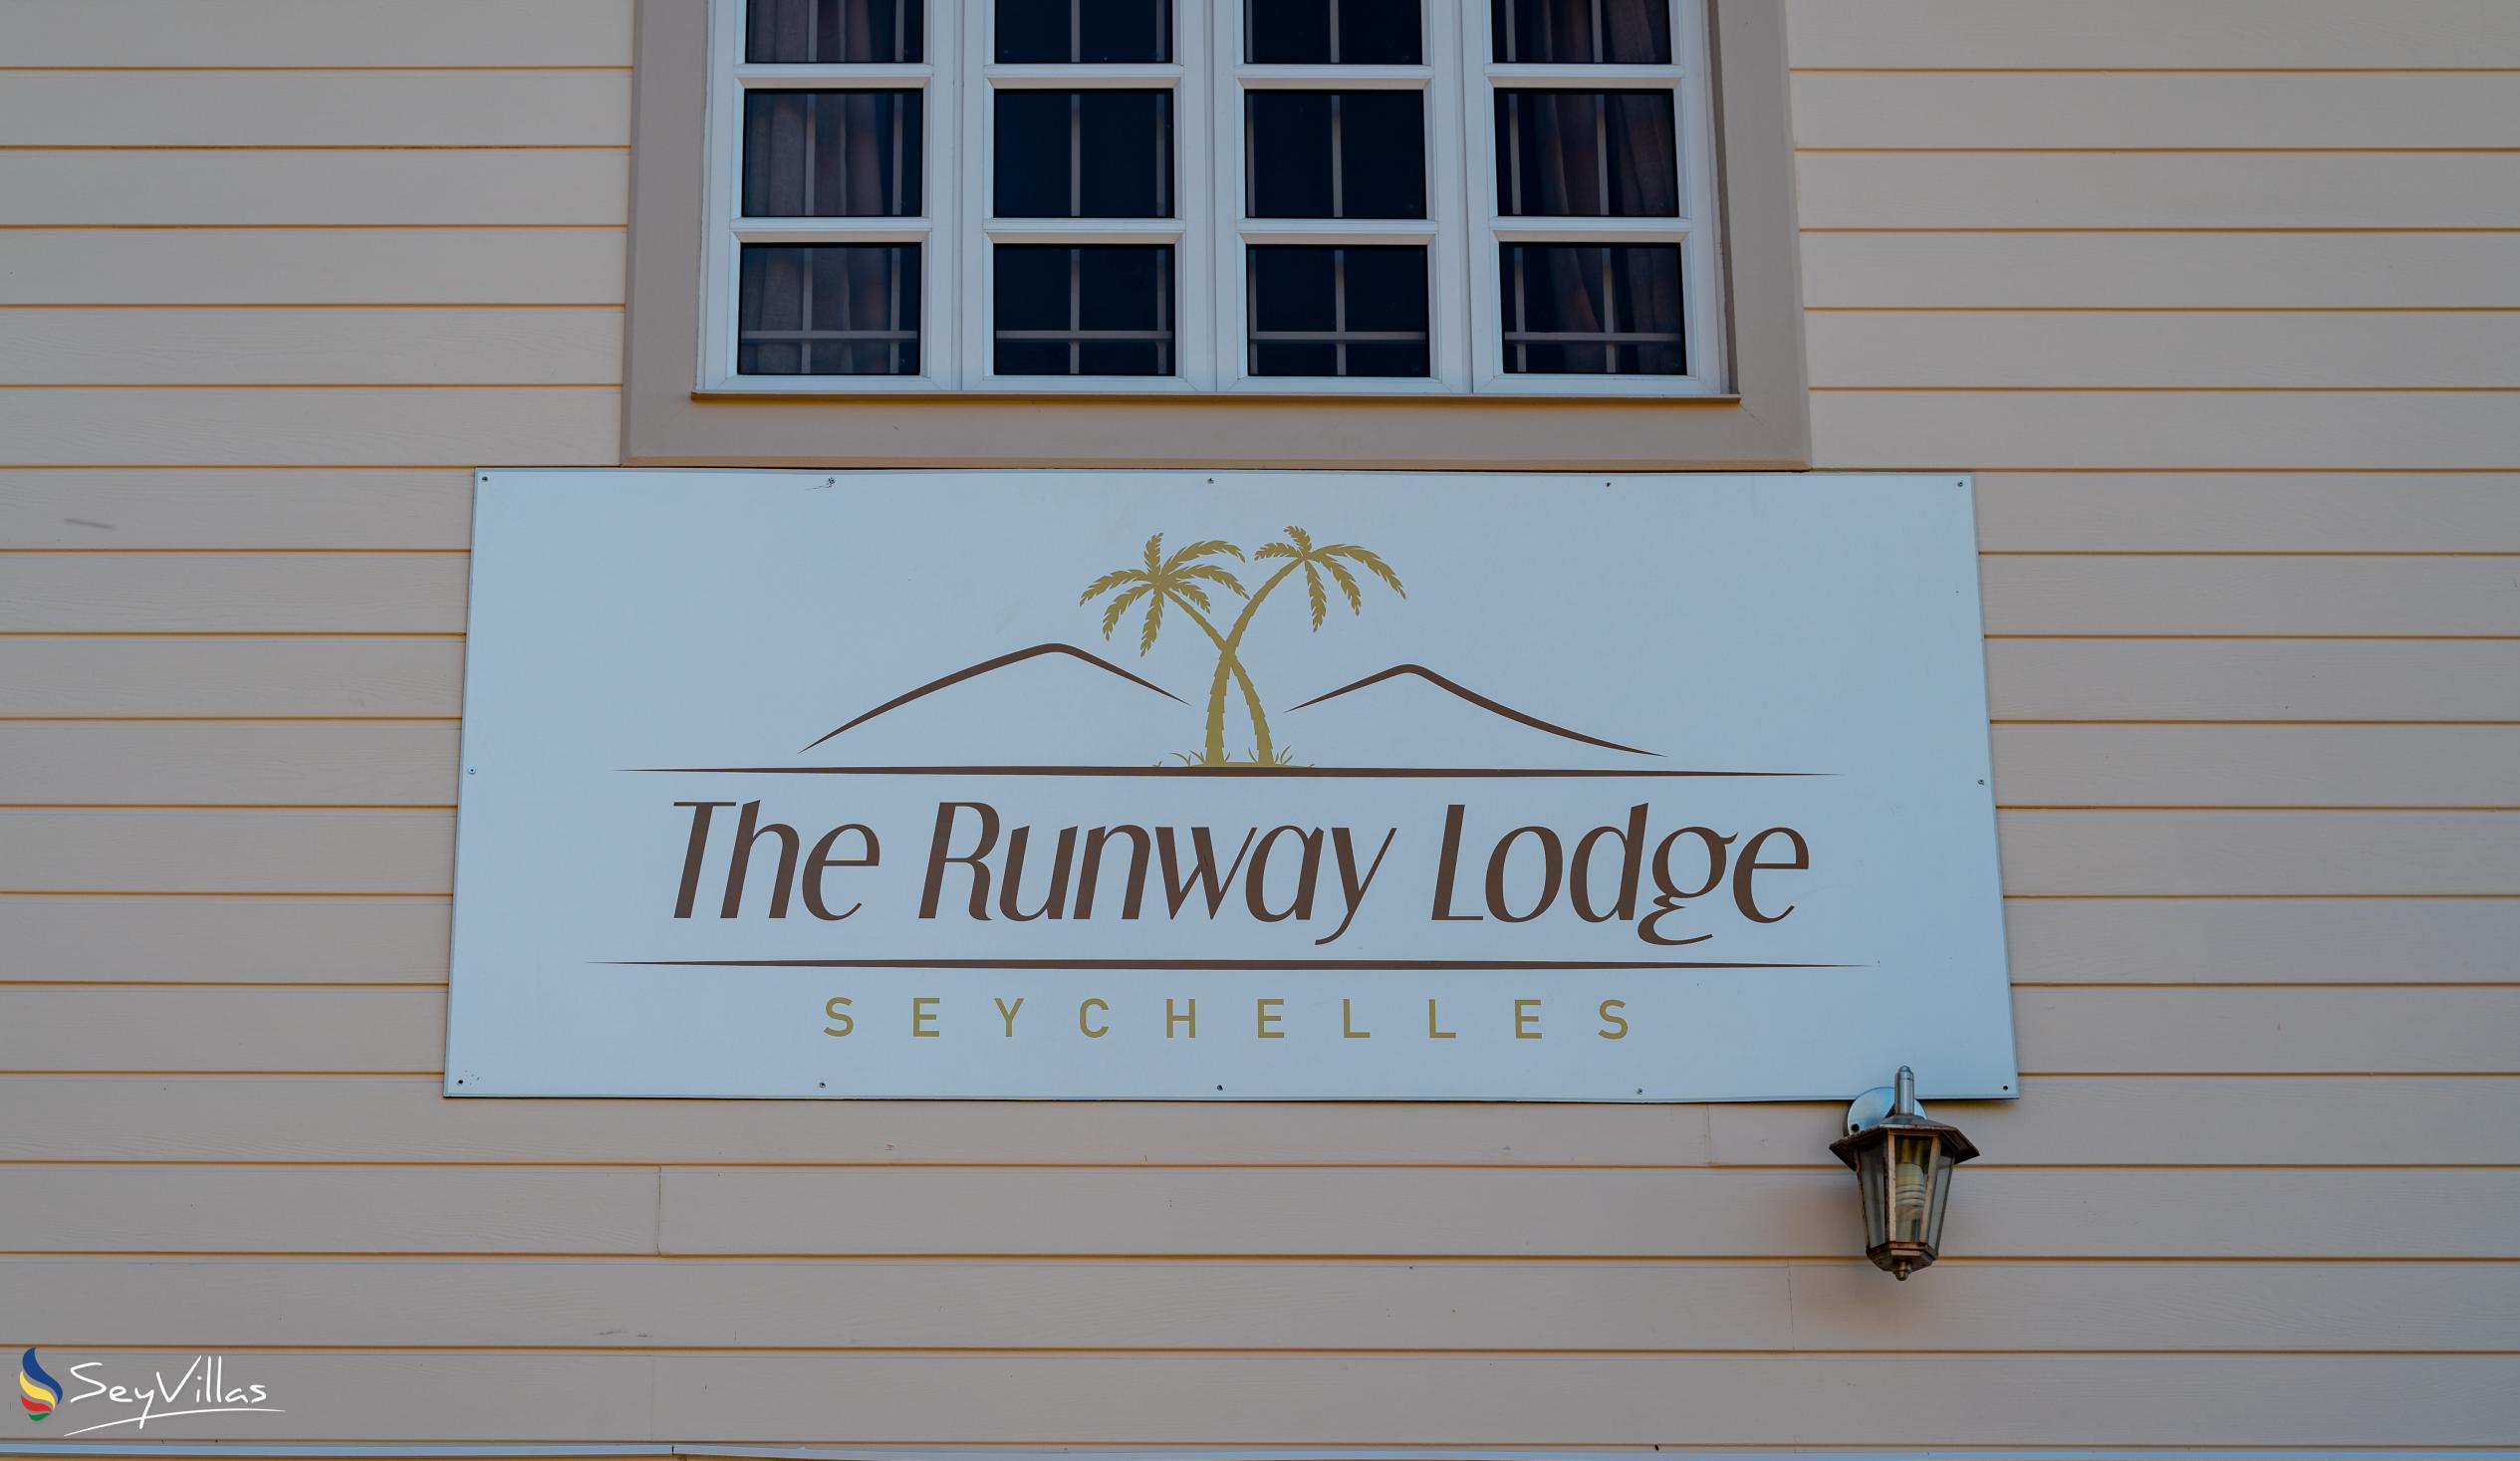 Photo 4: The Runway Lodge - Outdoor area - Mahé (Seychelles)